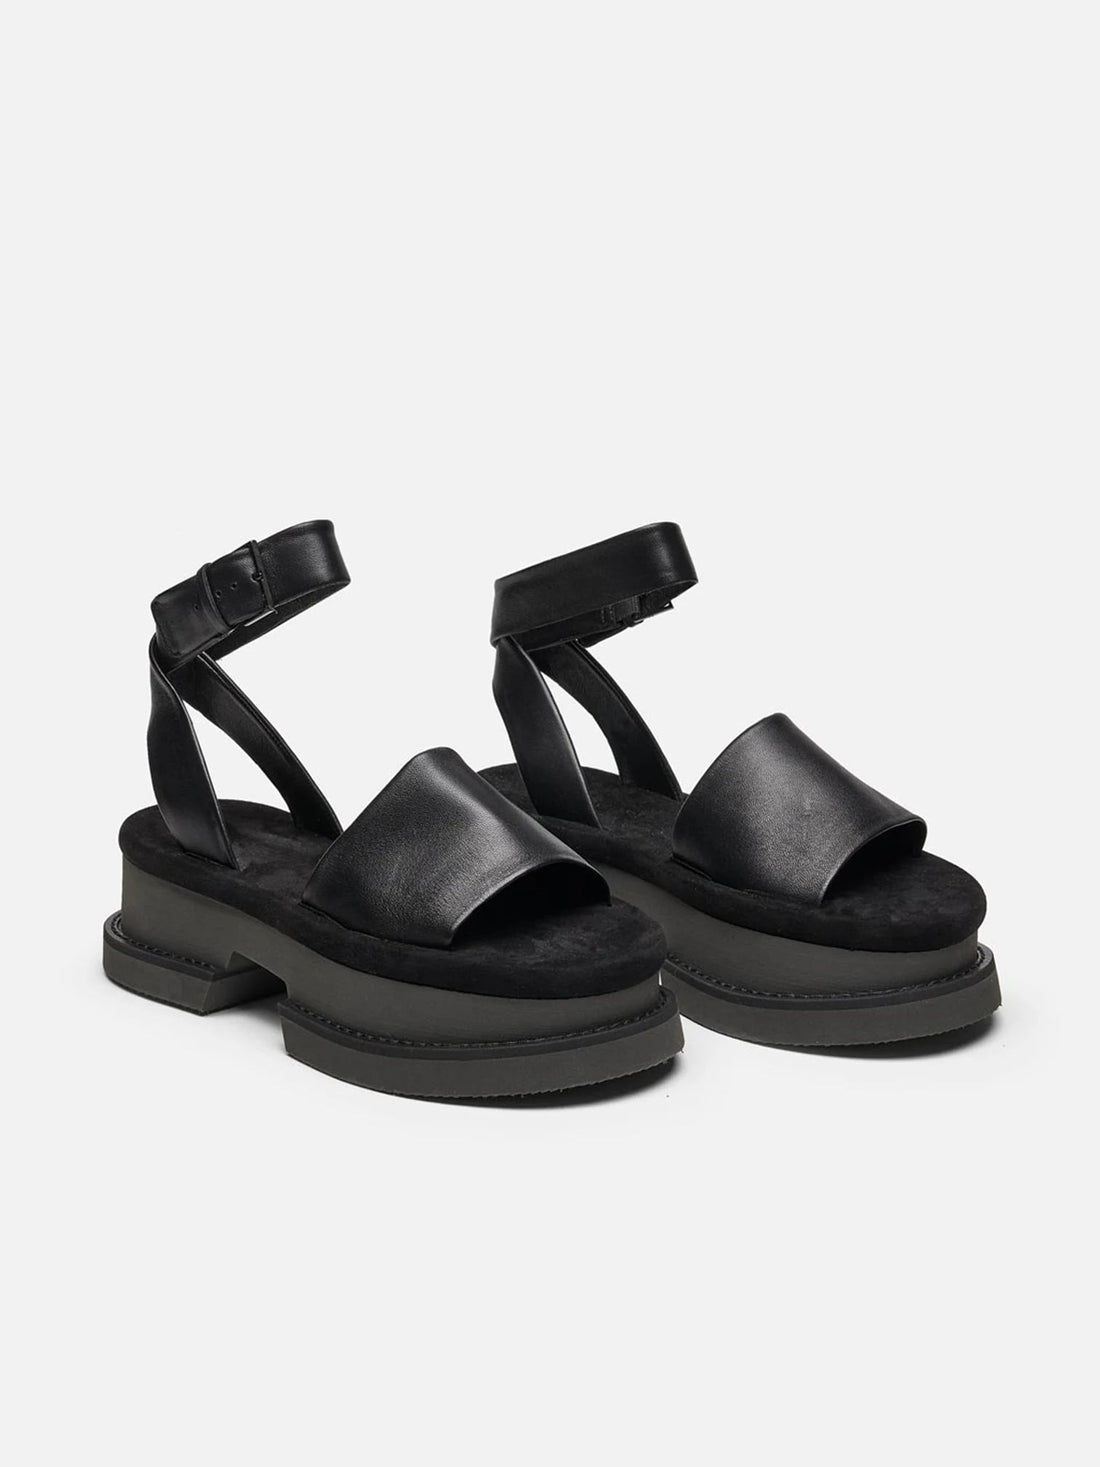 SANDALS - FILATE sandals, lambskin black - 3606063503105 - Clergerie Paris - Europe